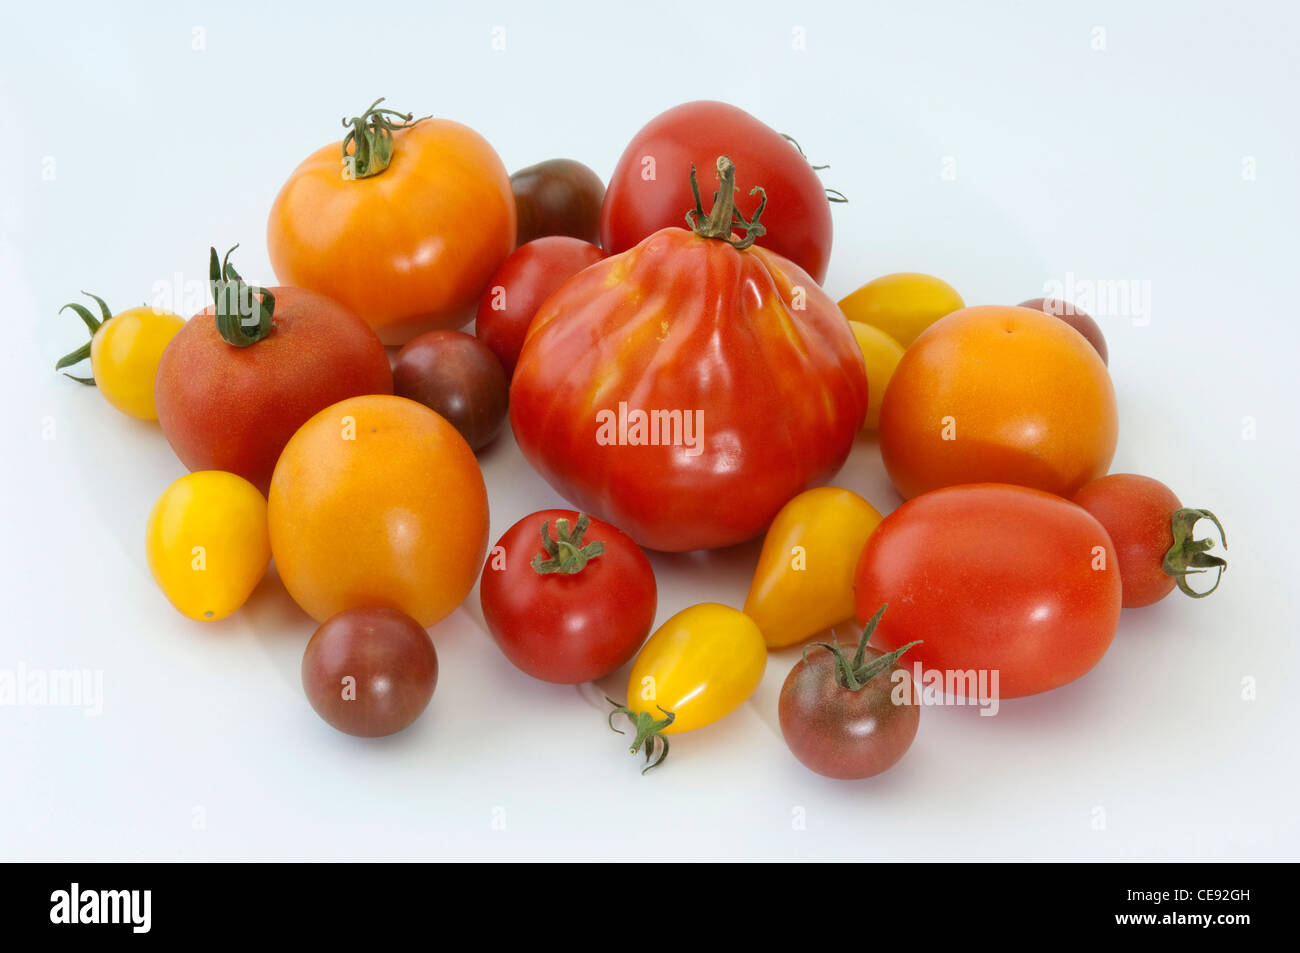 Tomate (Lycopersicon esculentum), fruto de diferentes variedades. Studio picture contra un fondo blanco. Foto de stock